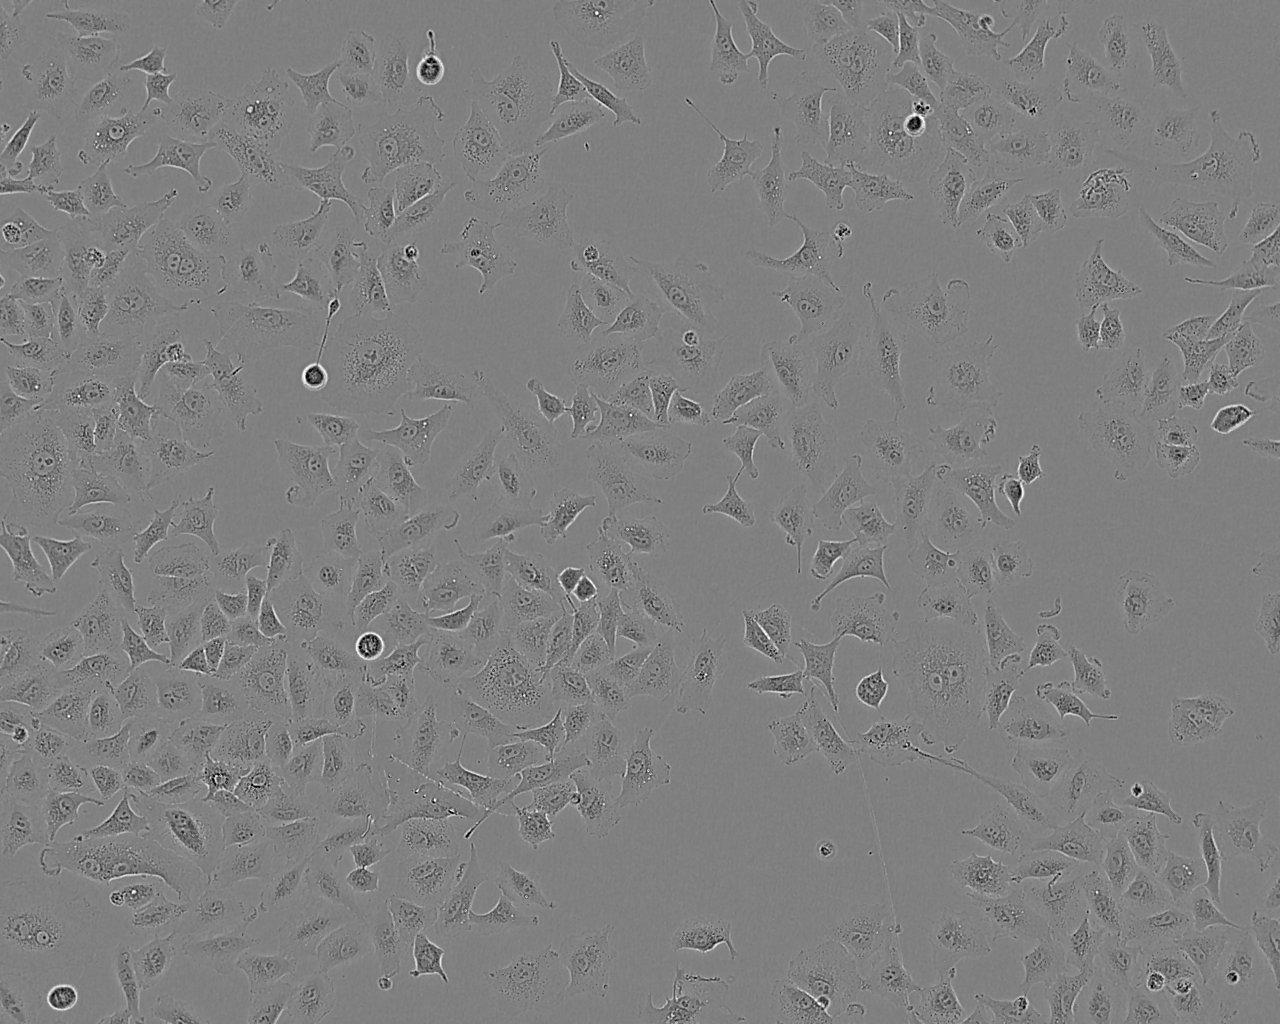 KP-4 epithelioid cells人胰腺导管细胞癌细胞系,KP-4 epithelioid cells